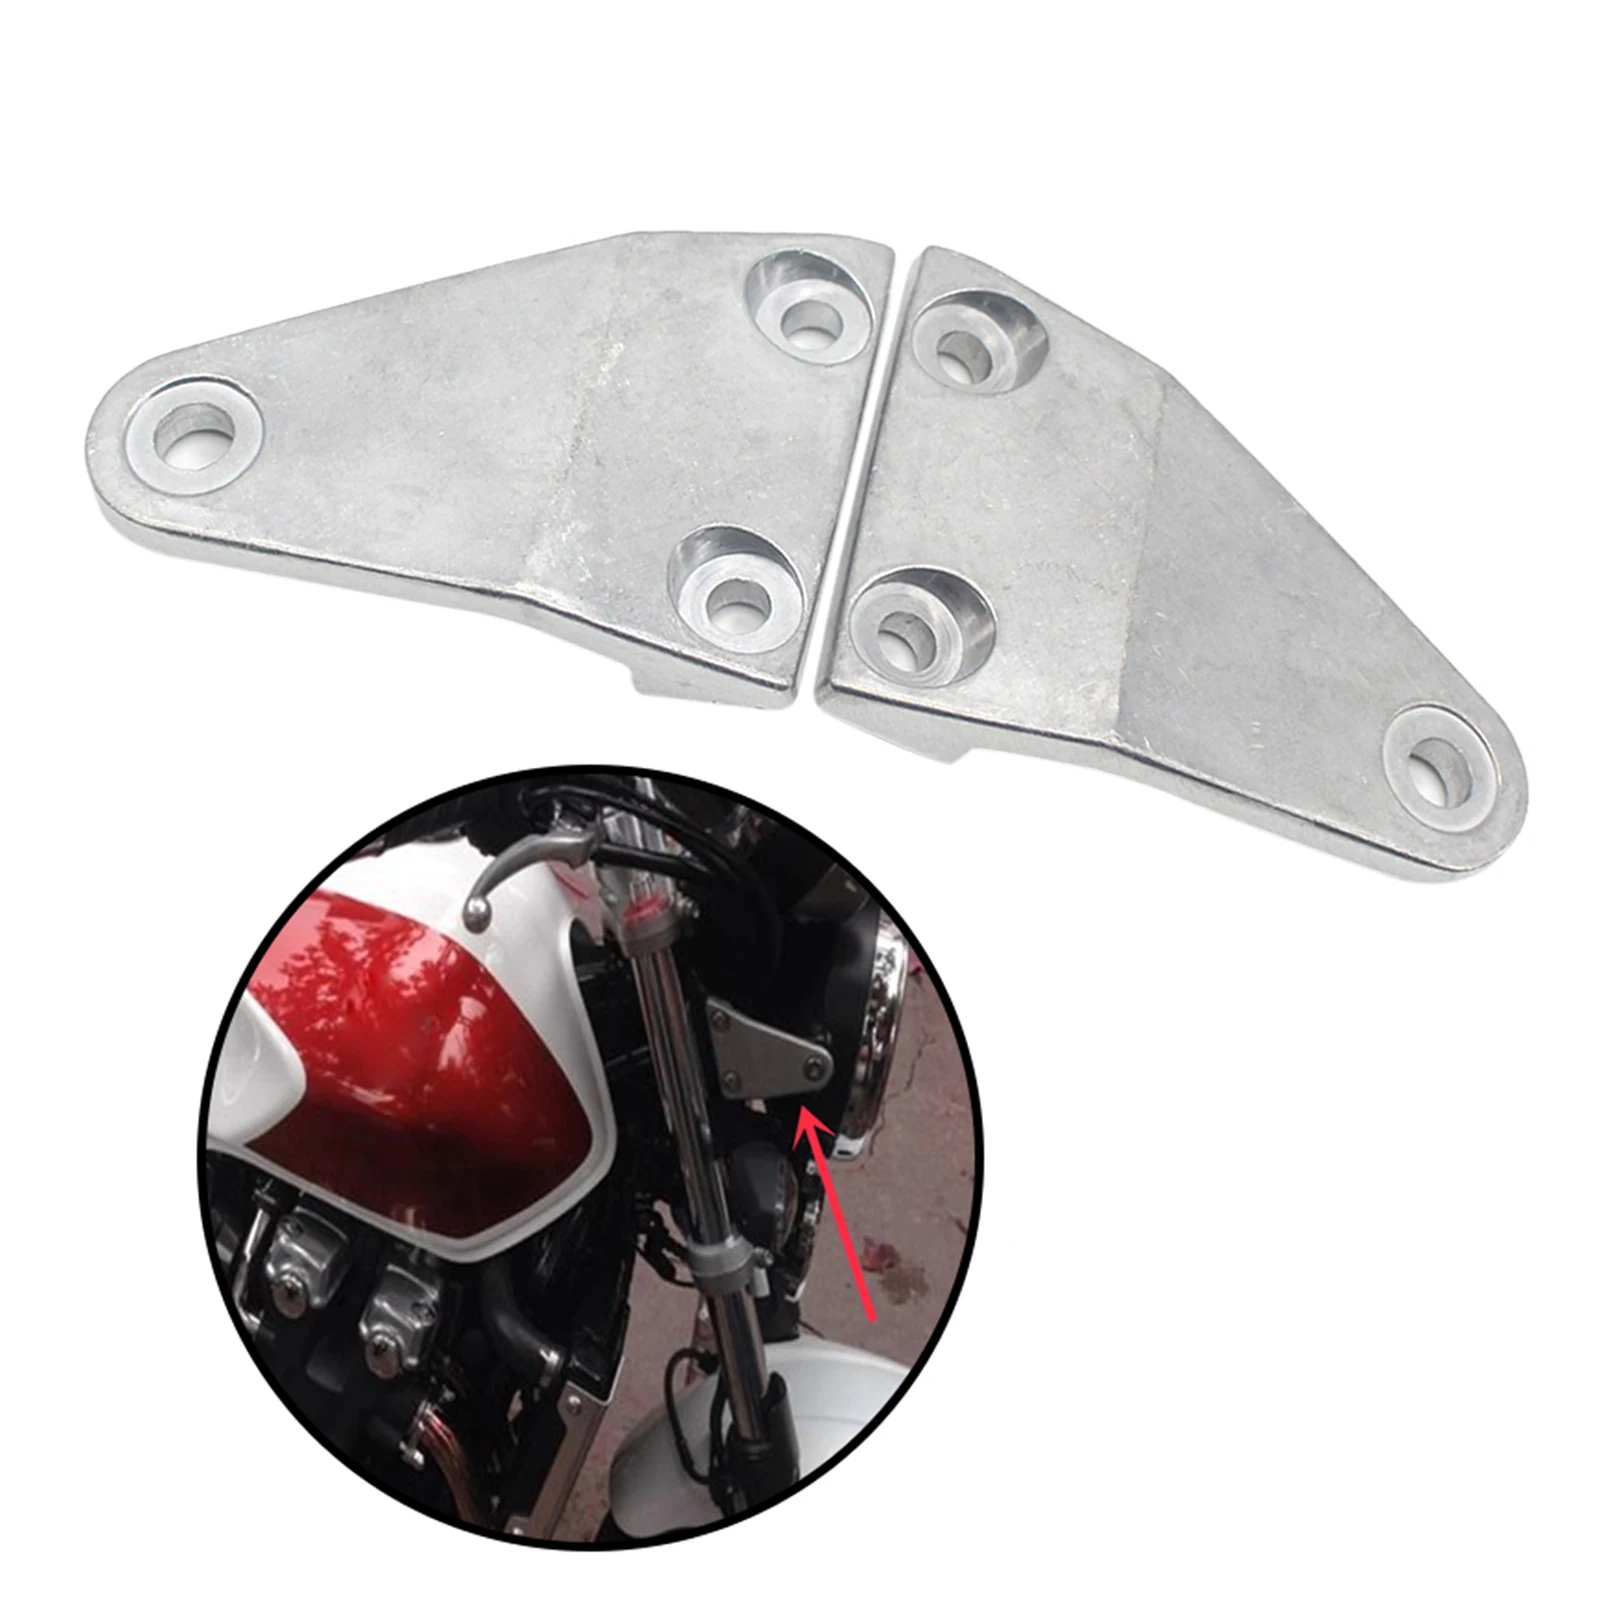 2Pcs Motorcycle Aluminum Headlight Bracket Headlight Fixed Frame Replacement for